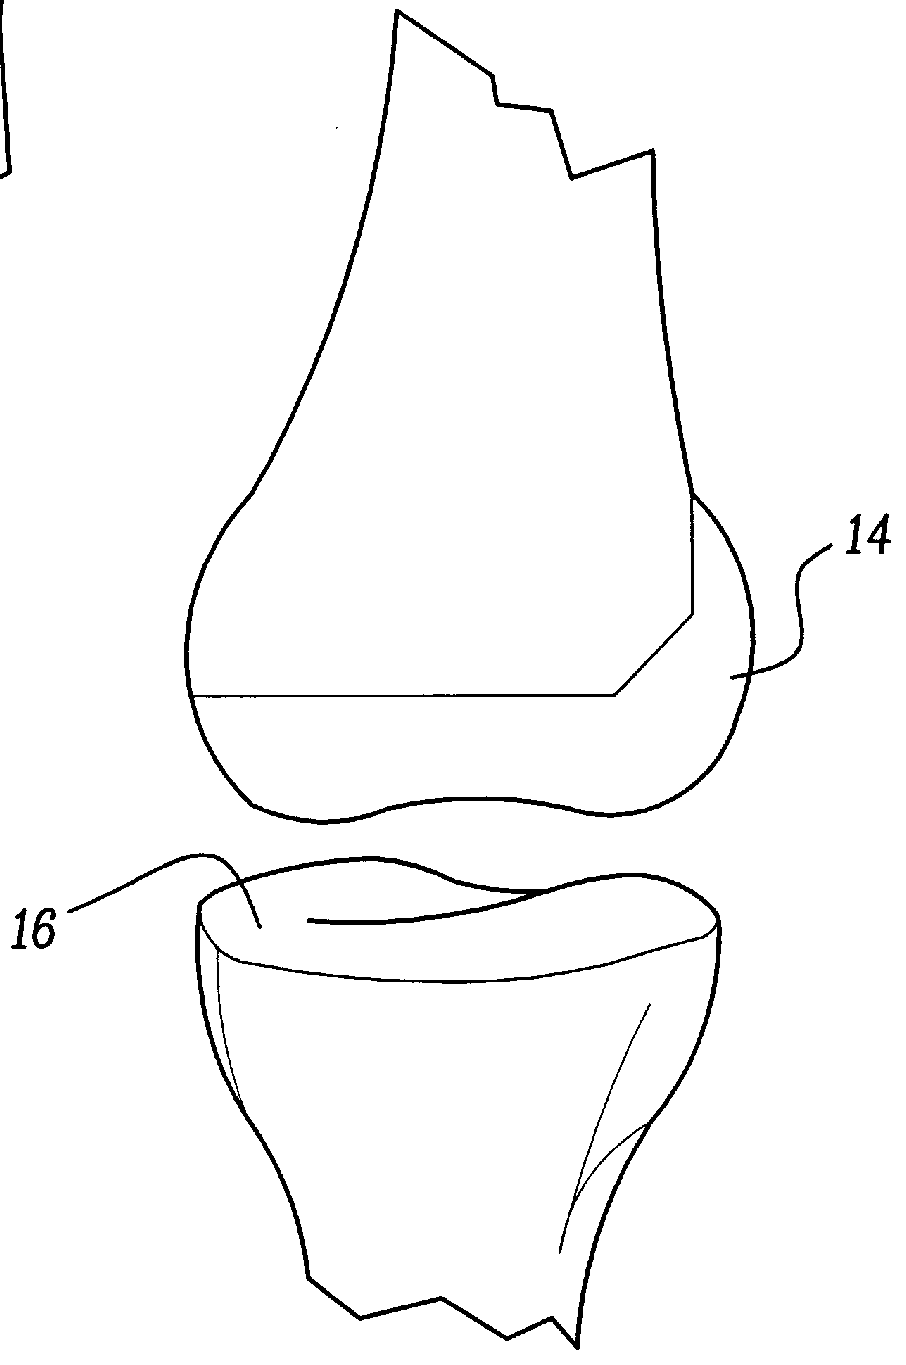 Method of implanting a uni-condylar knee prosthesis